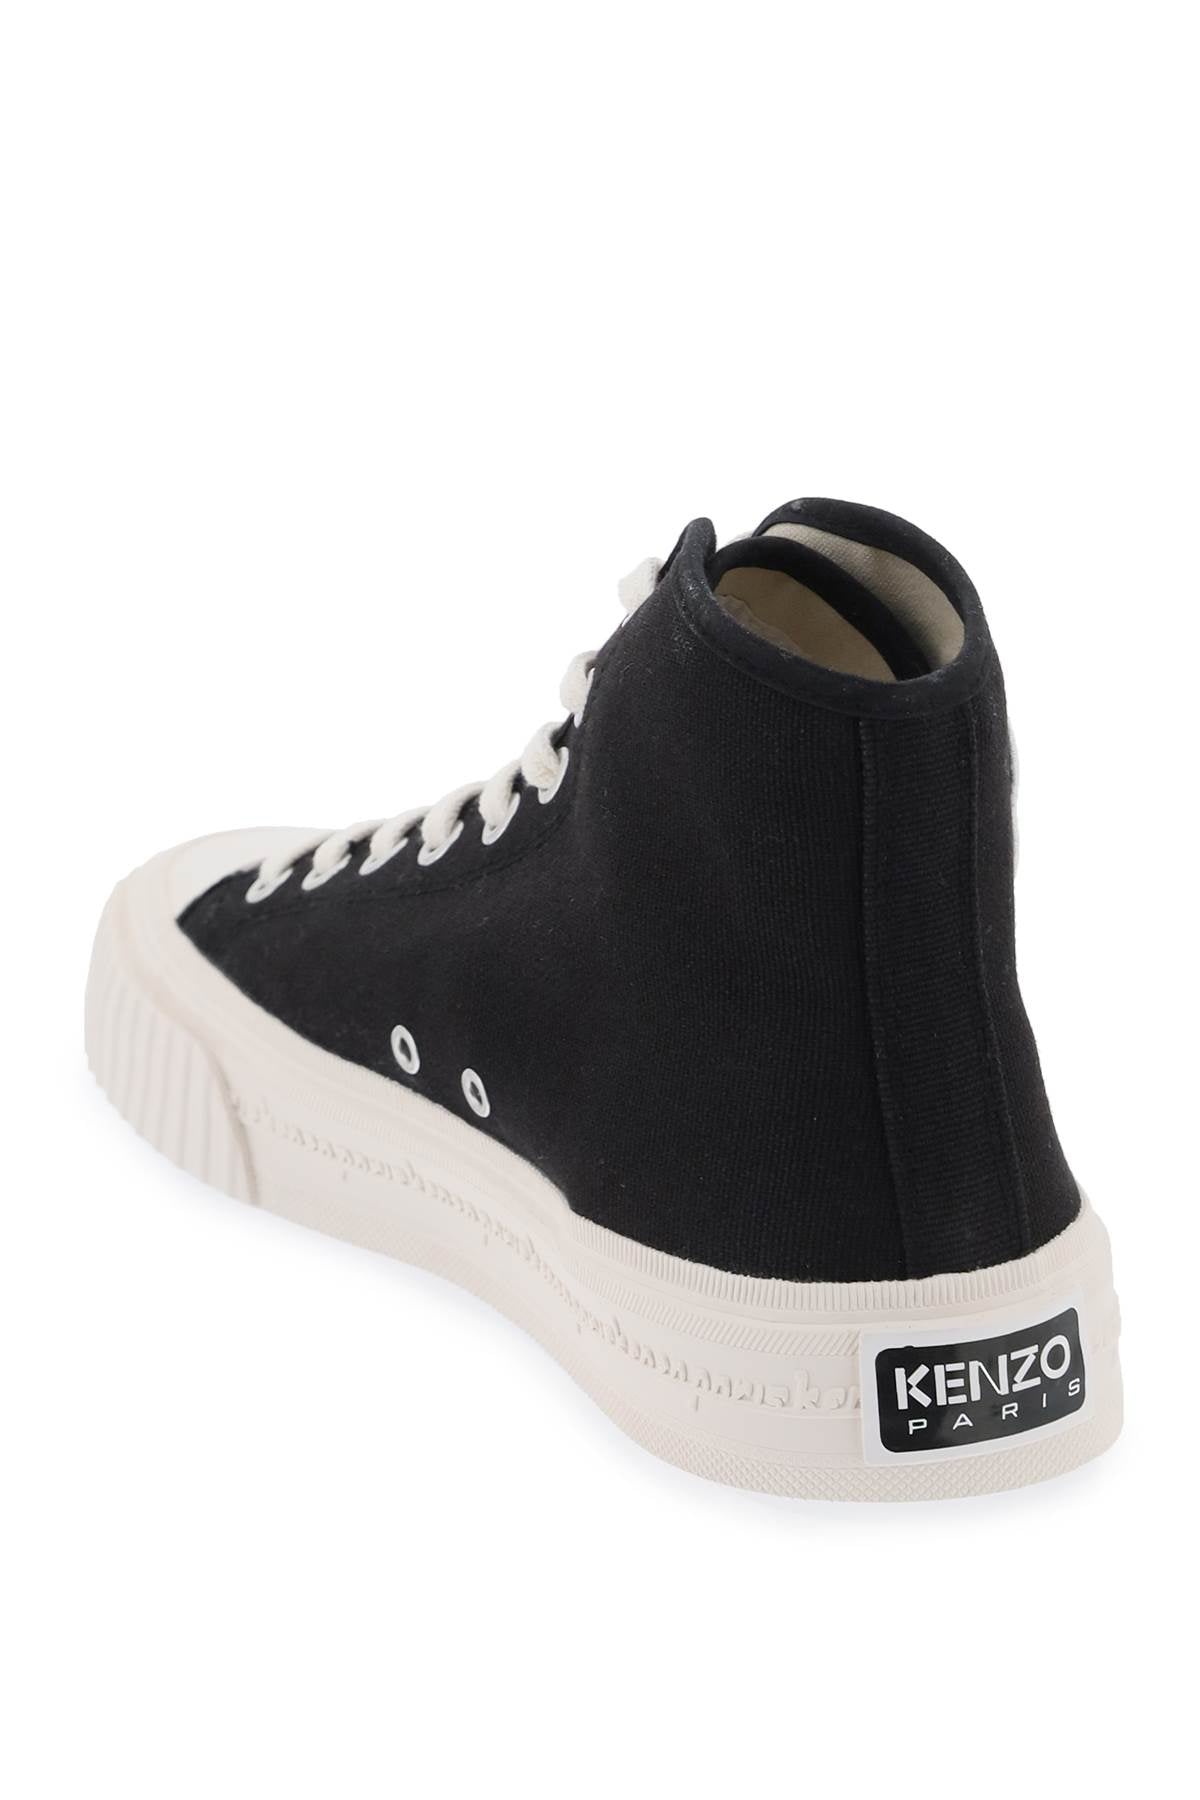 Kenzo canvas kenzo foxy high-top sneakers-2